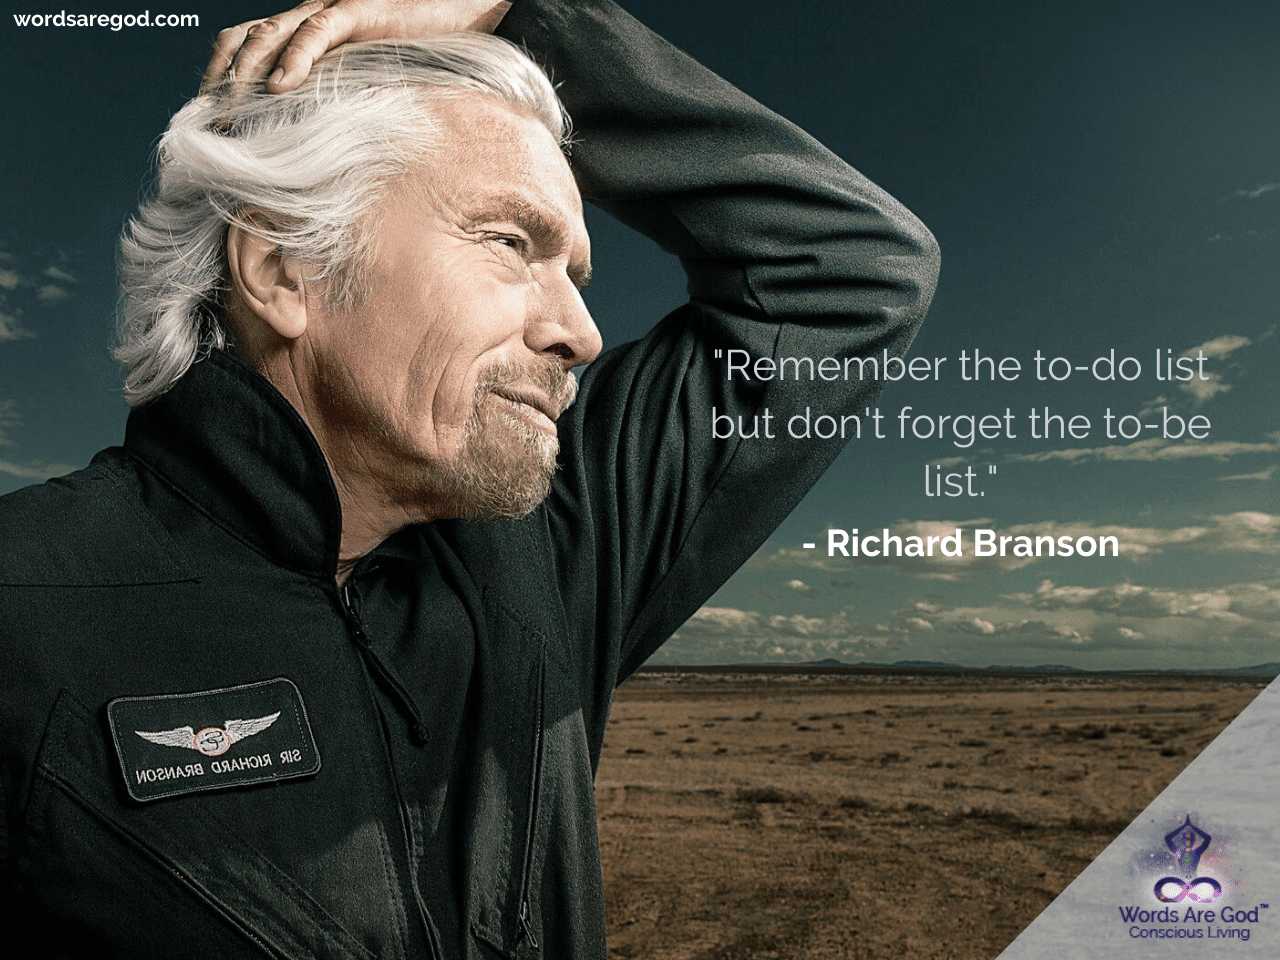 Richard Branson Inspirational Quote